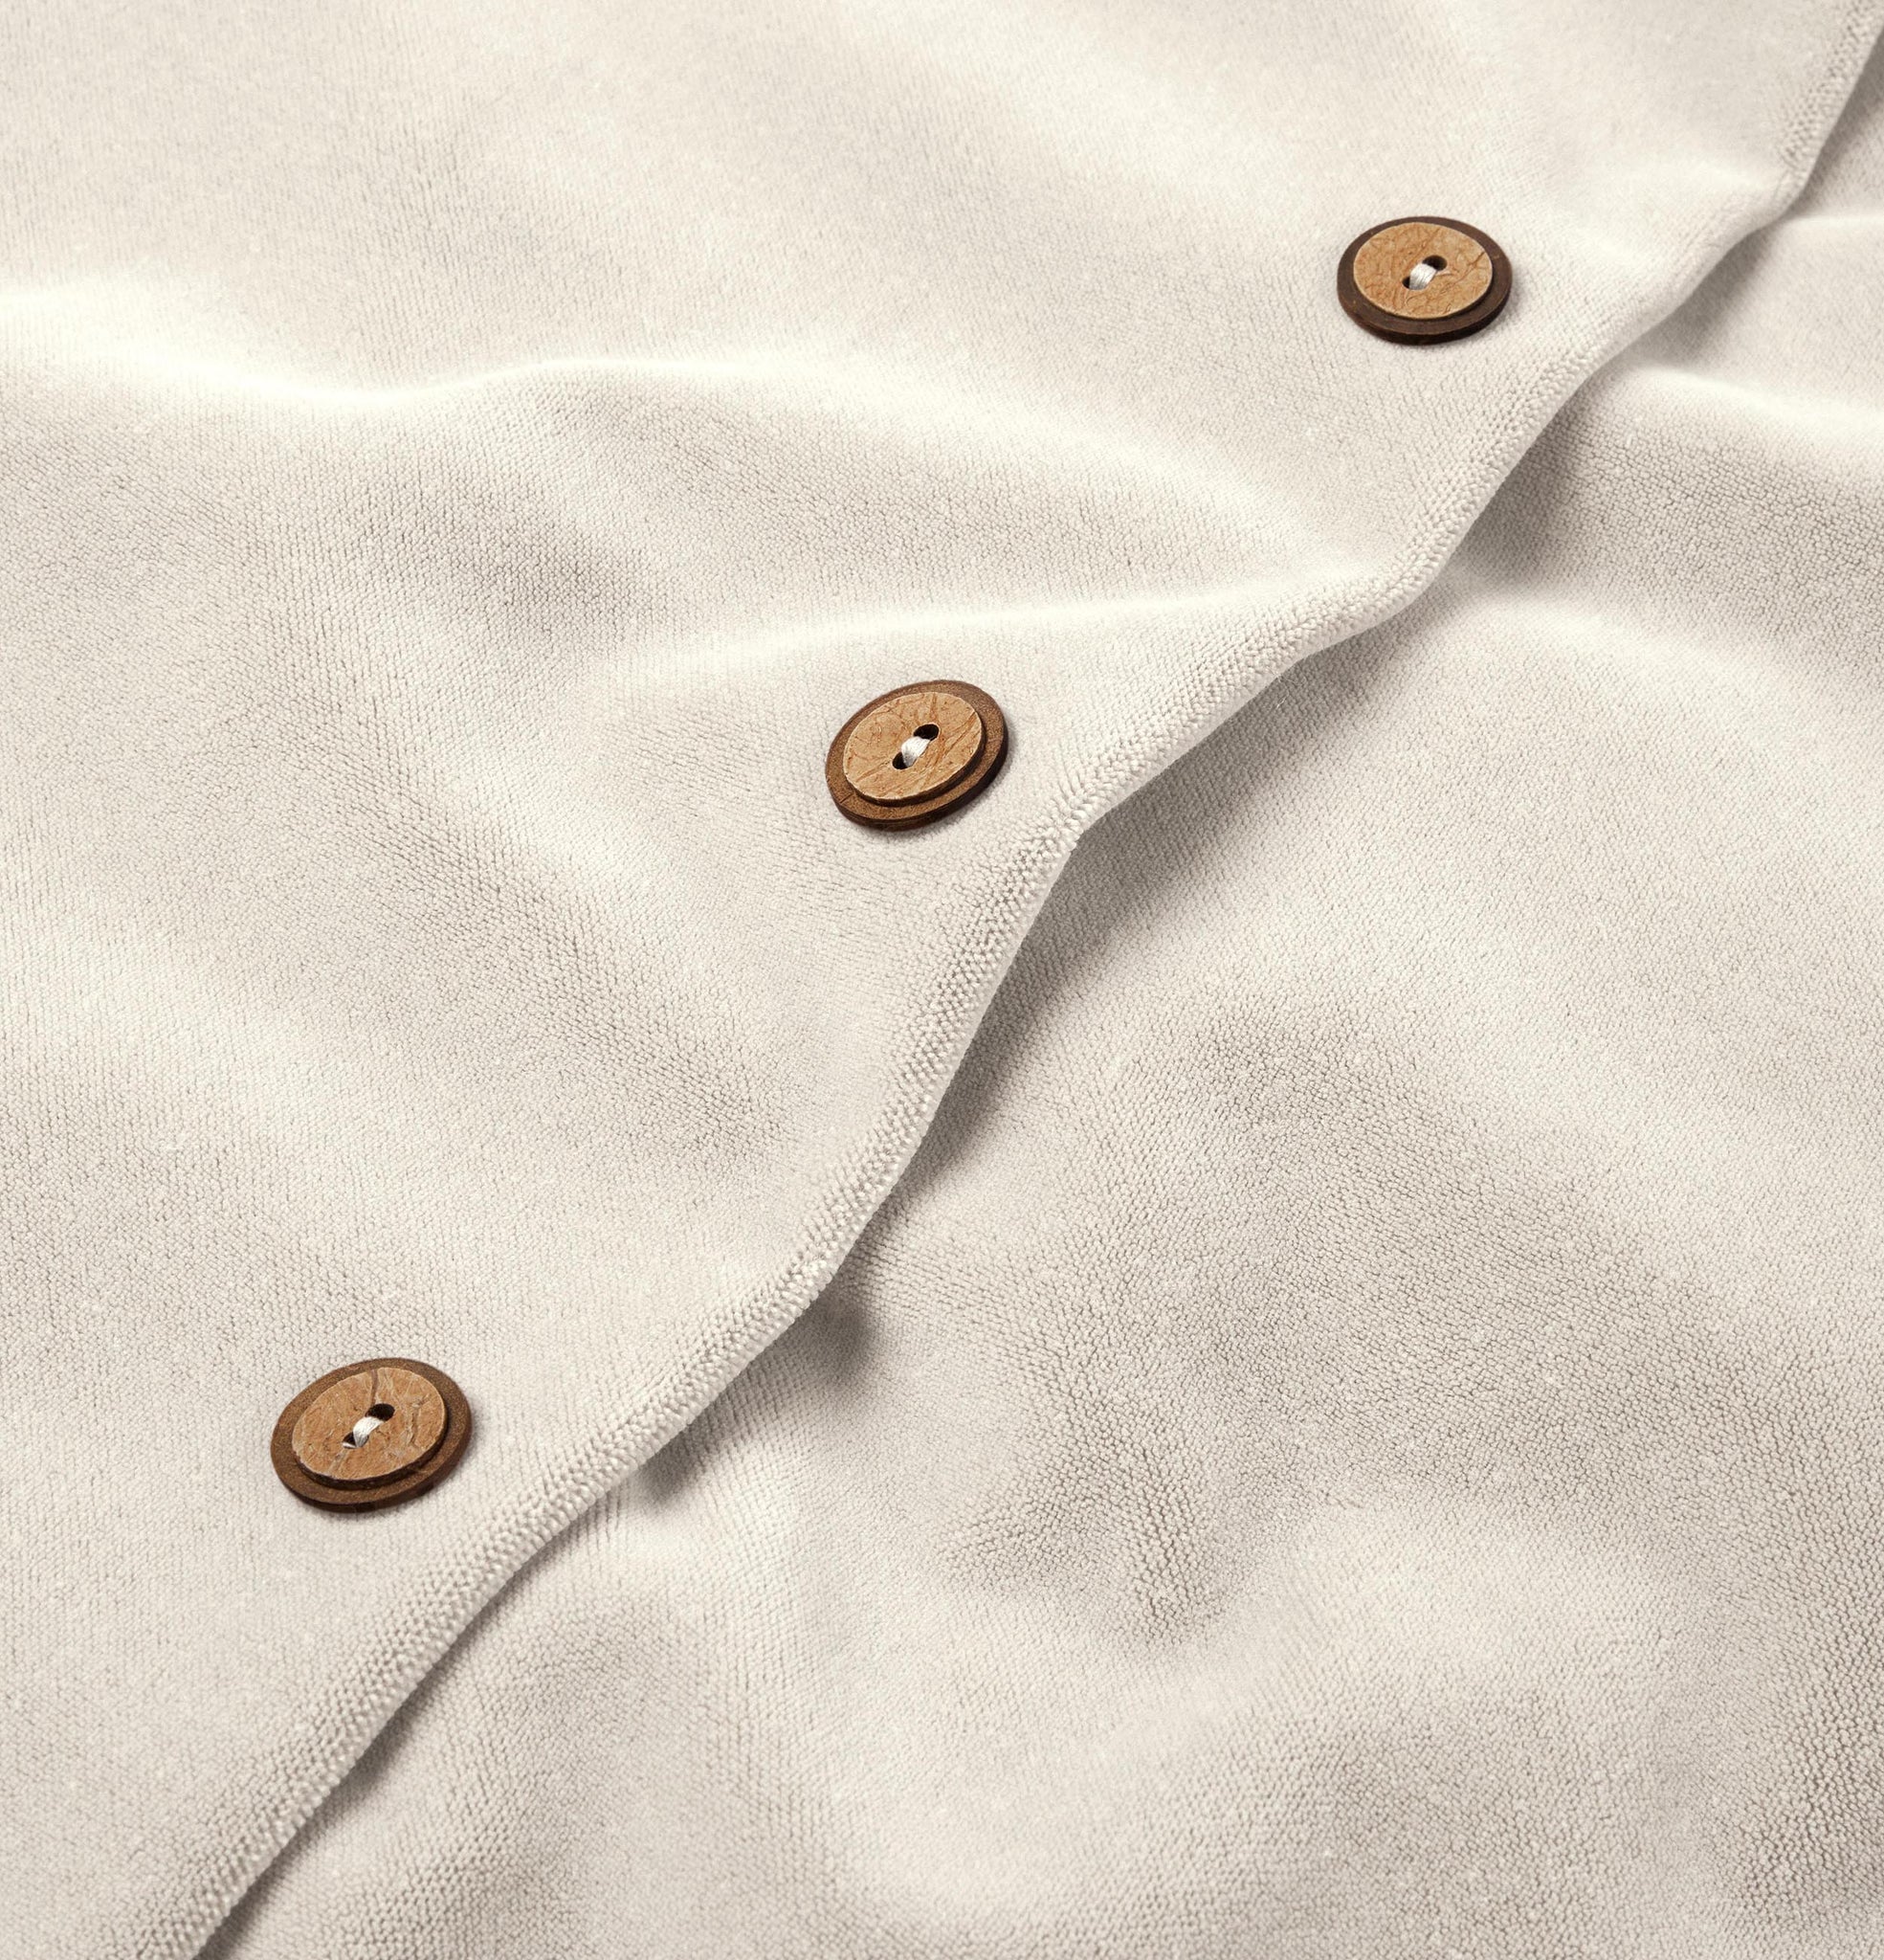 Button detail of cloudy white velvet cushion